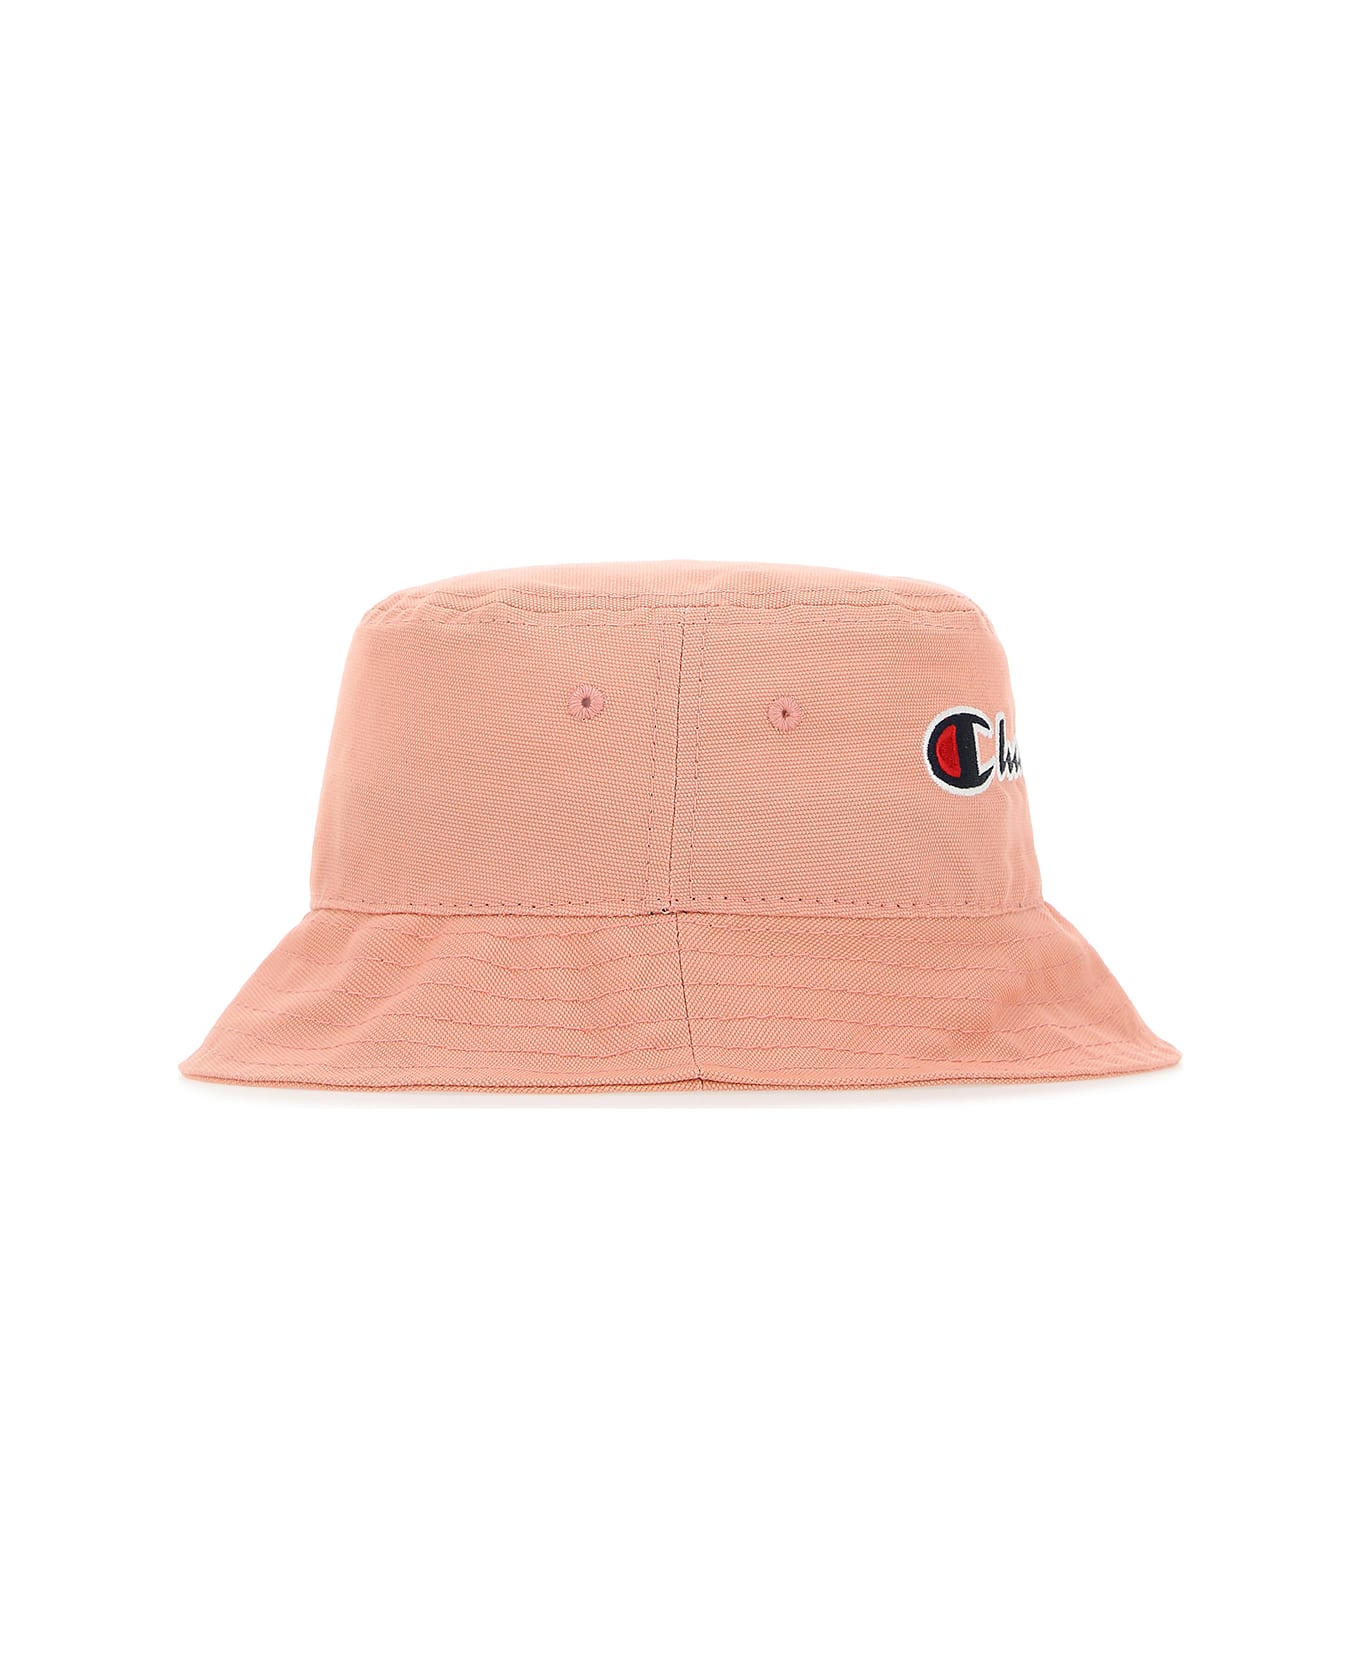 Champion Pink Cotton Bucket Hat - PS092